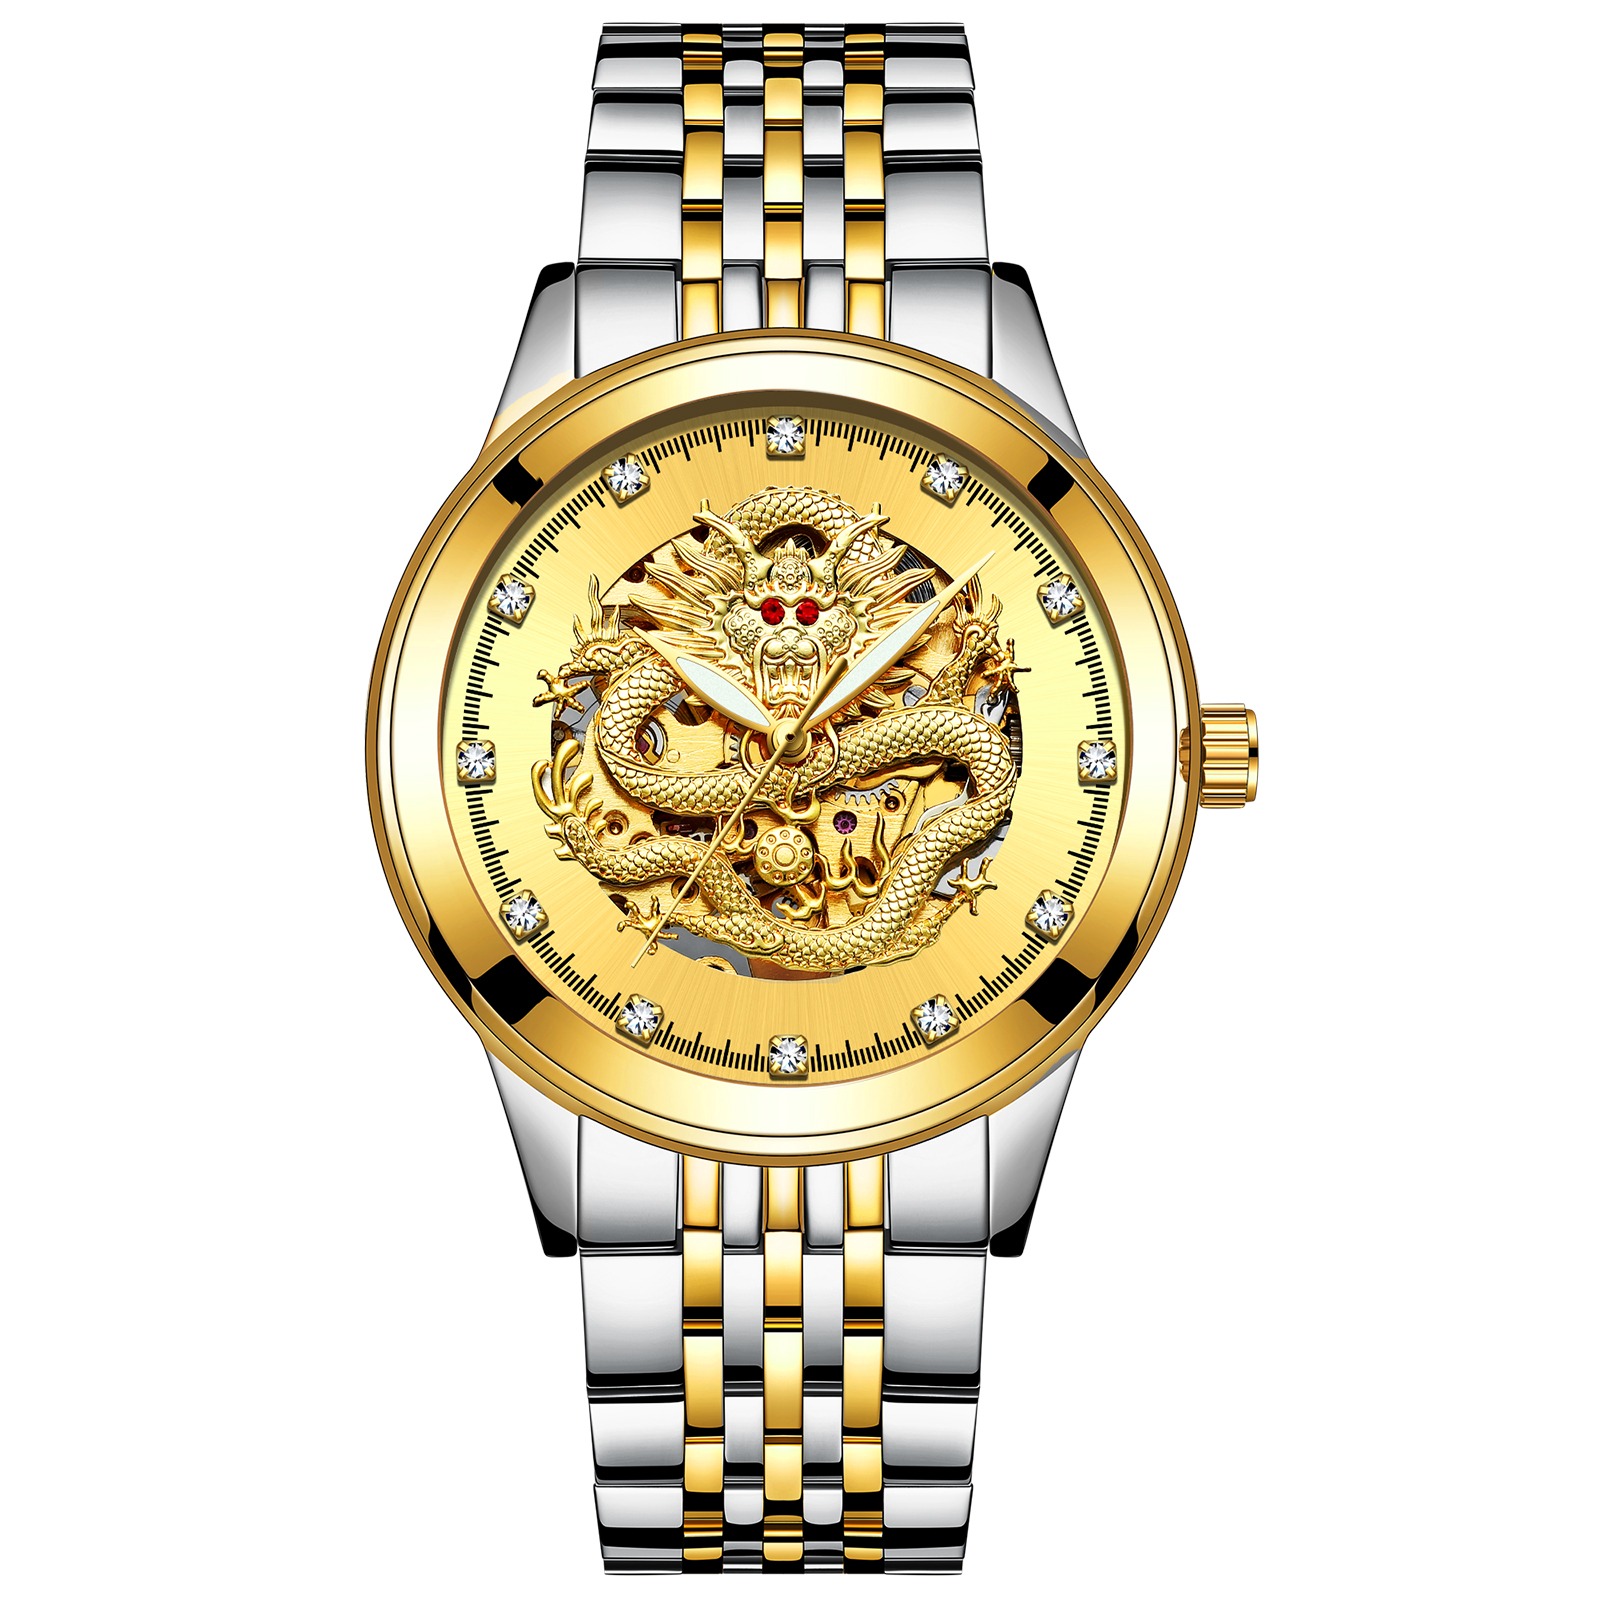 TEVISE 9006 B Dragon Watch Men automatic mechanical tourbillon watches fashion mens watches automatic self-wind Steel Wrist Watch